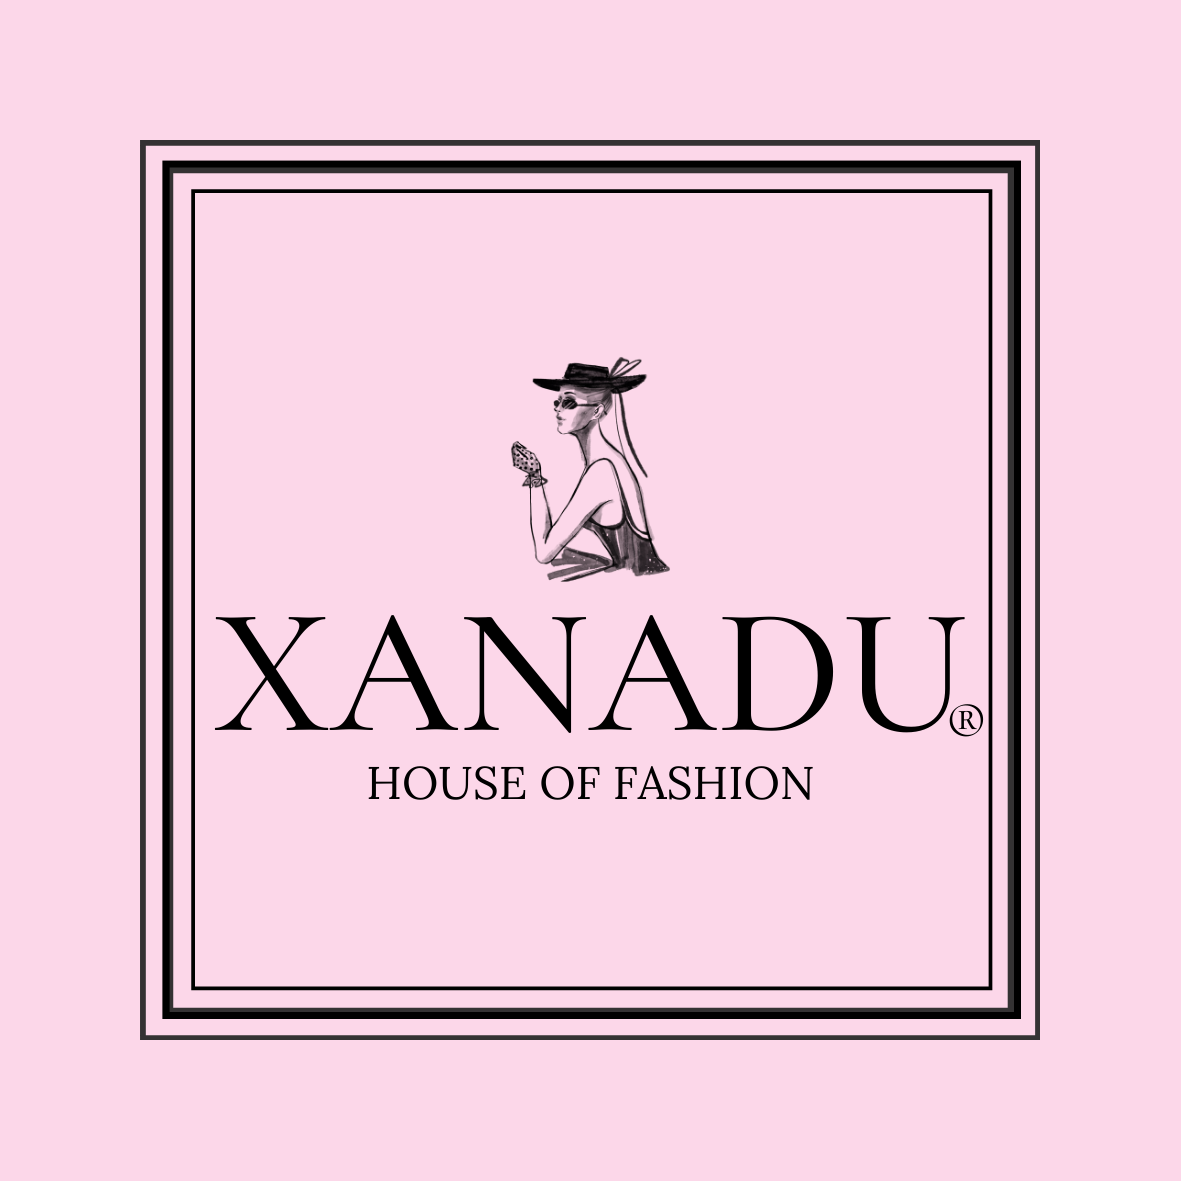 Xanadu House of Fashion